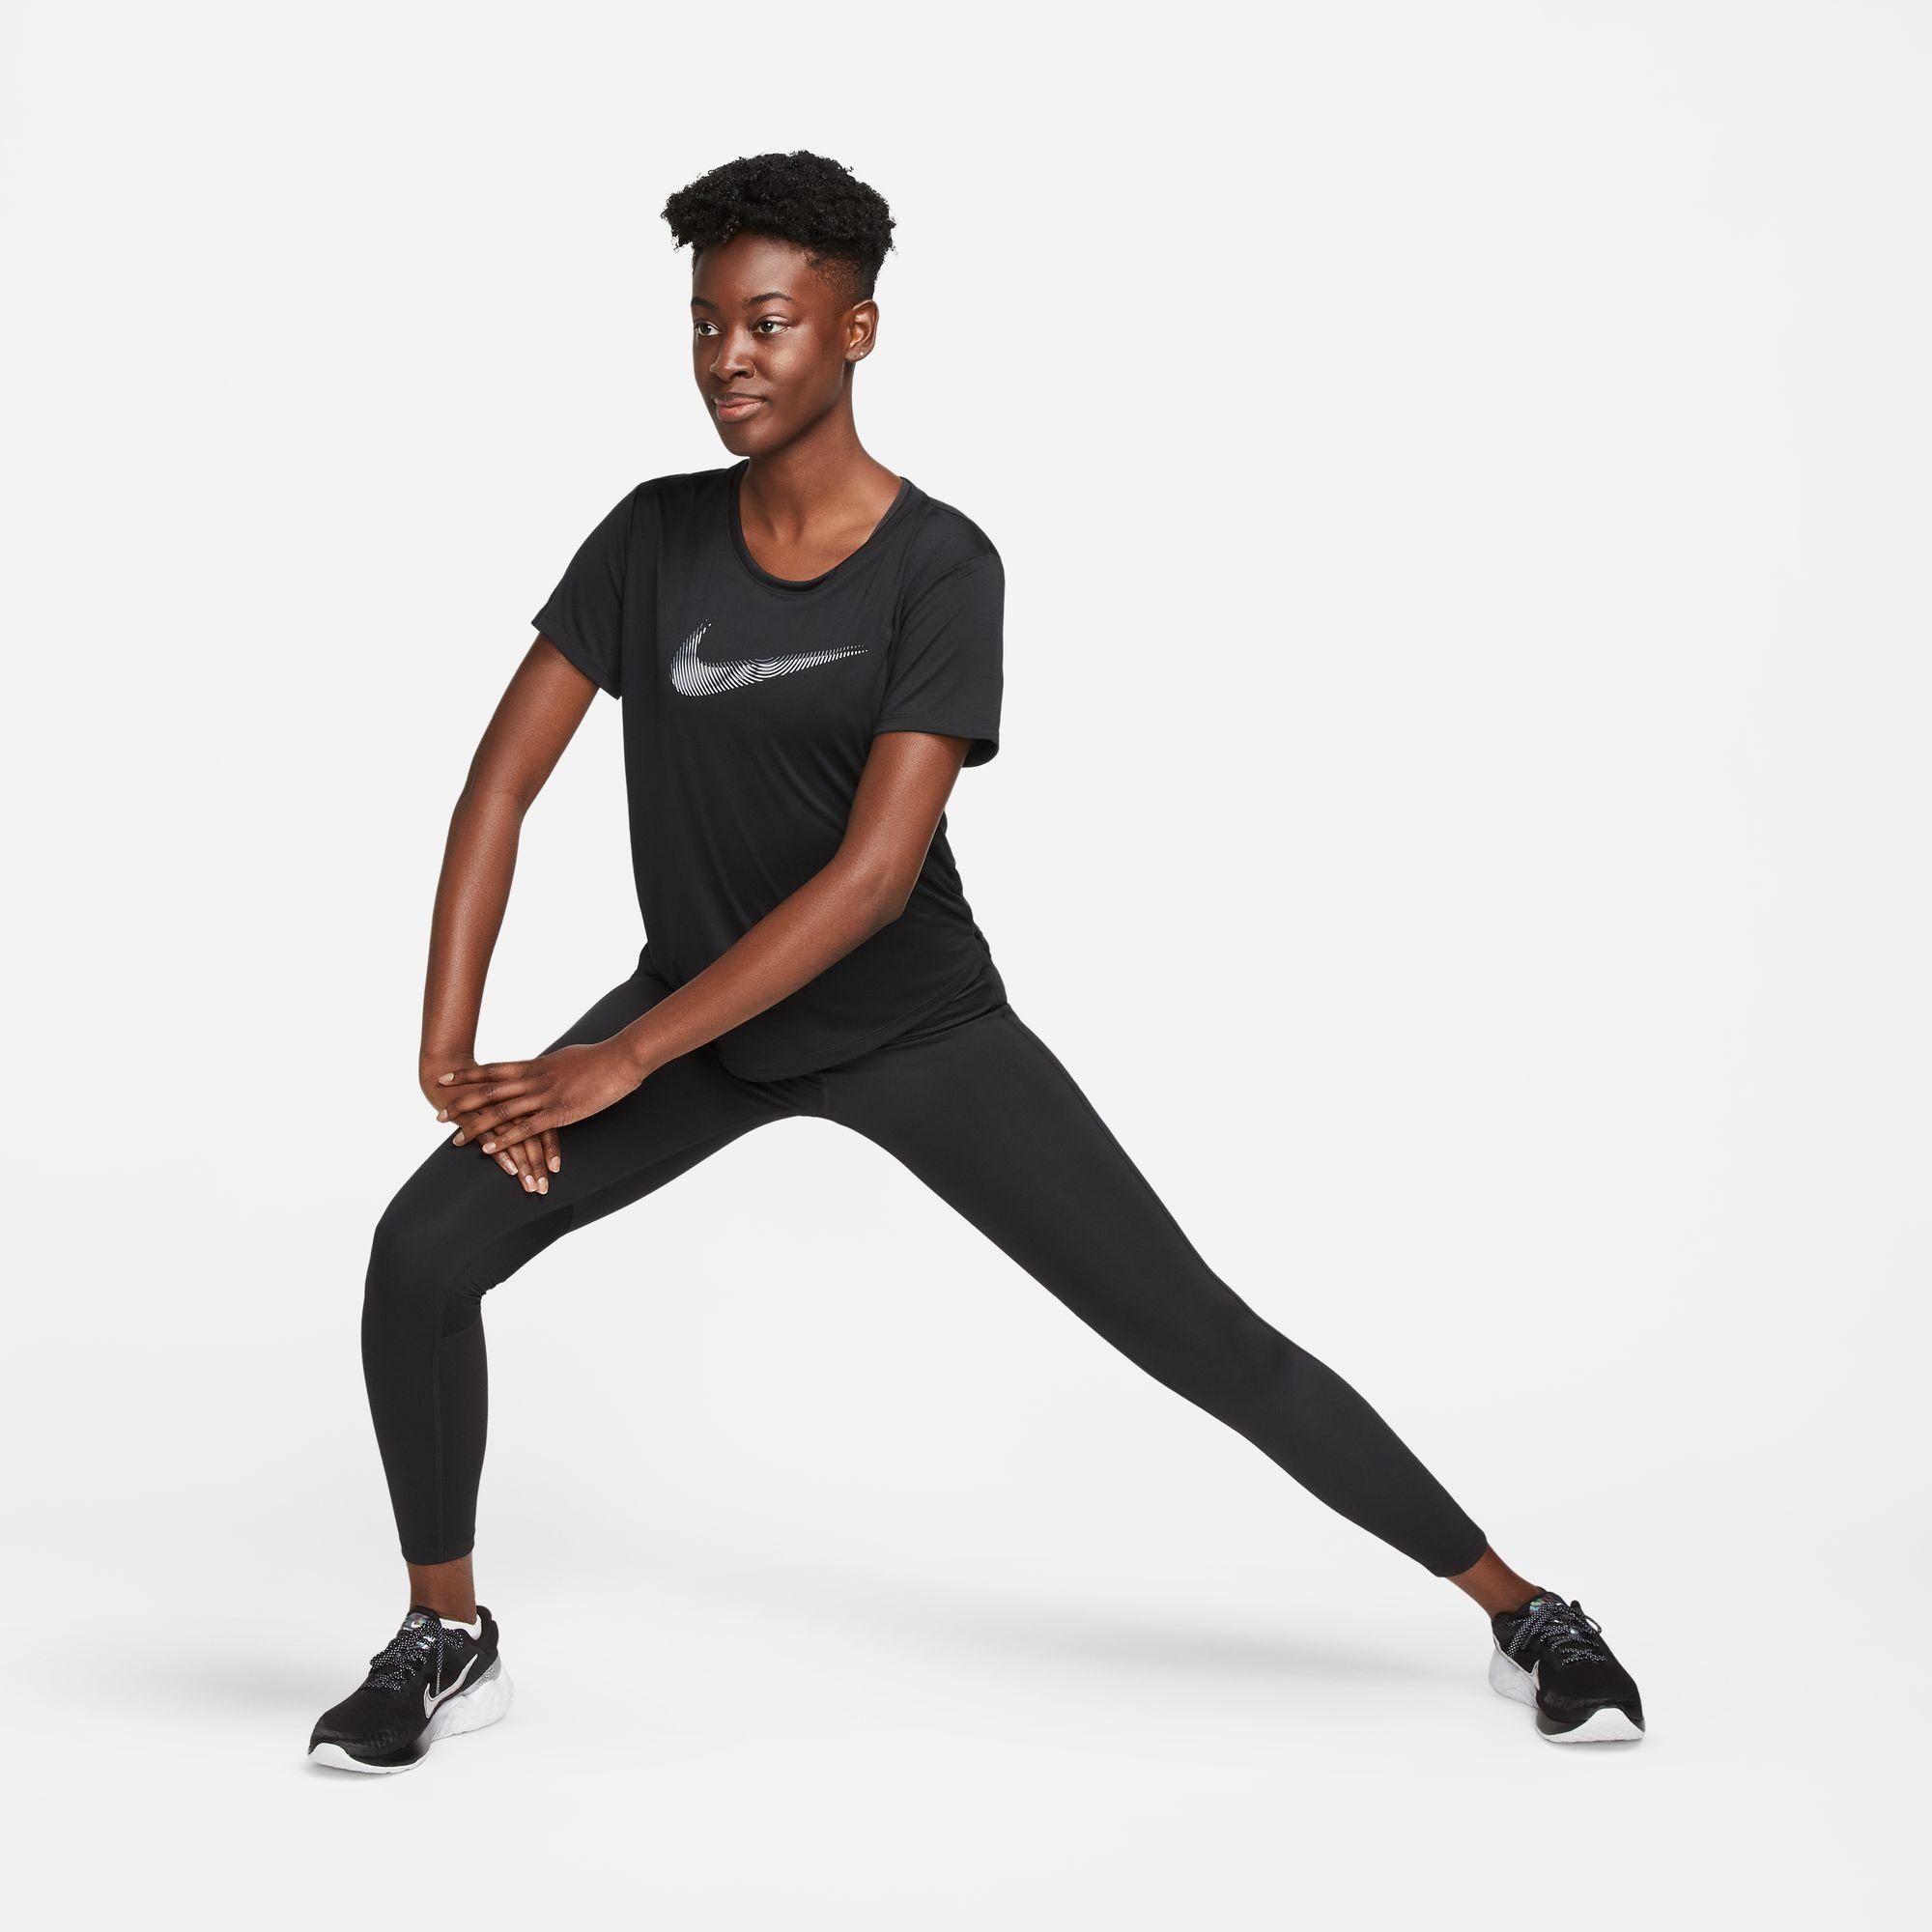 SWOOSH GREY BLACK/COOL Nike TOP DRI-FIT SHORT-SLEEVE RUNNING WOMEN'S Laufshirt